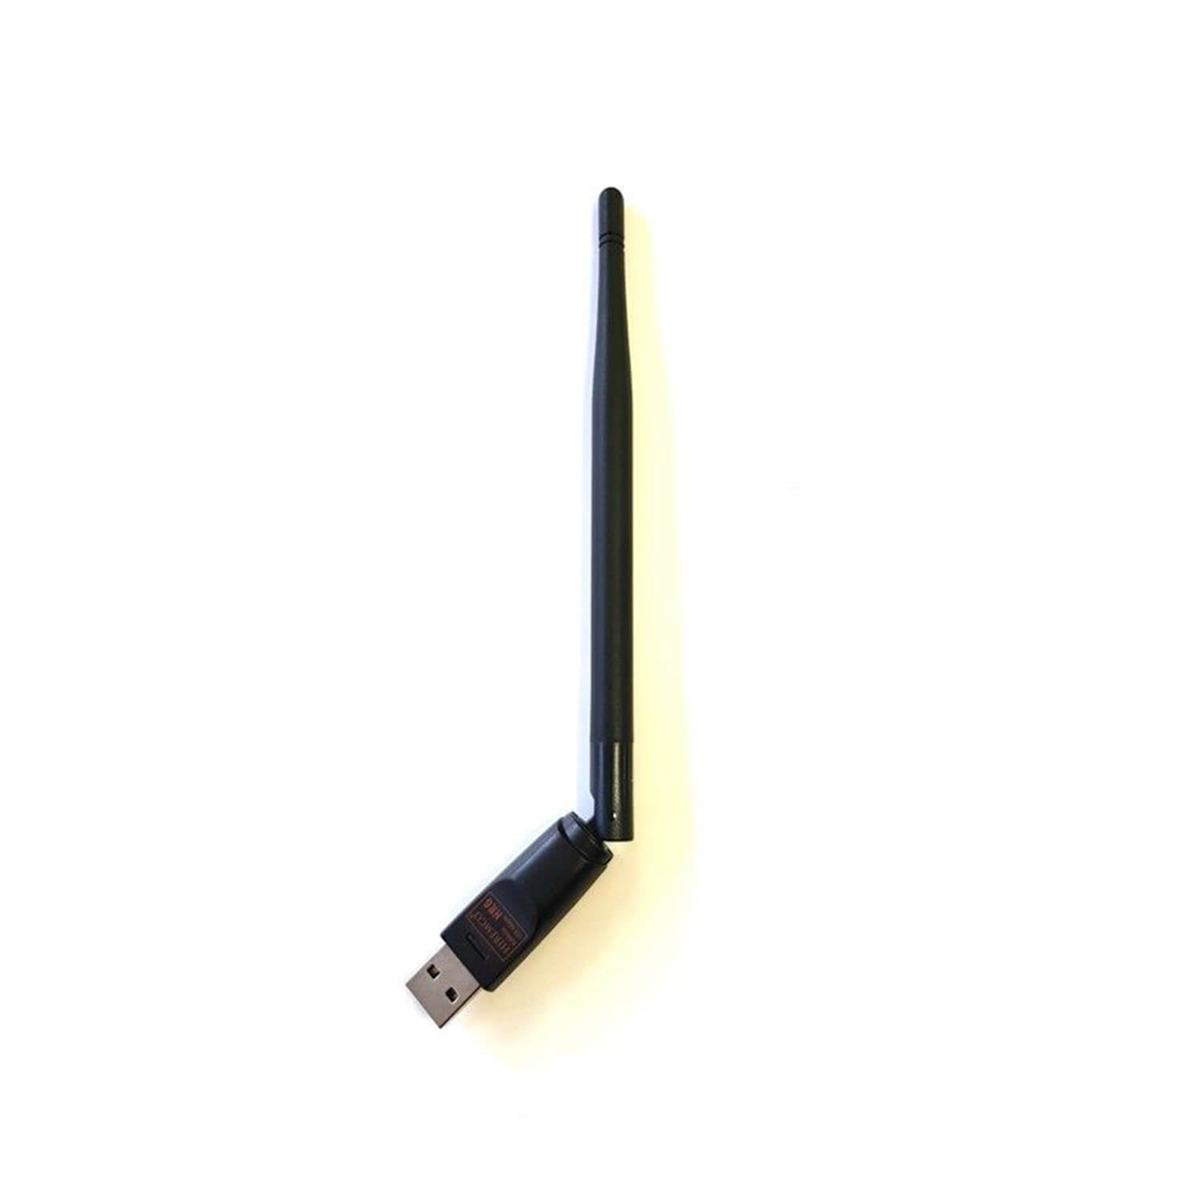 Hiremco 2.4 GHz 150 Mbps USB Kablosuz WiFi Adaptör MT-7601